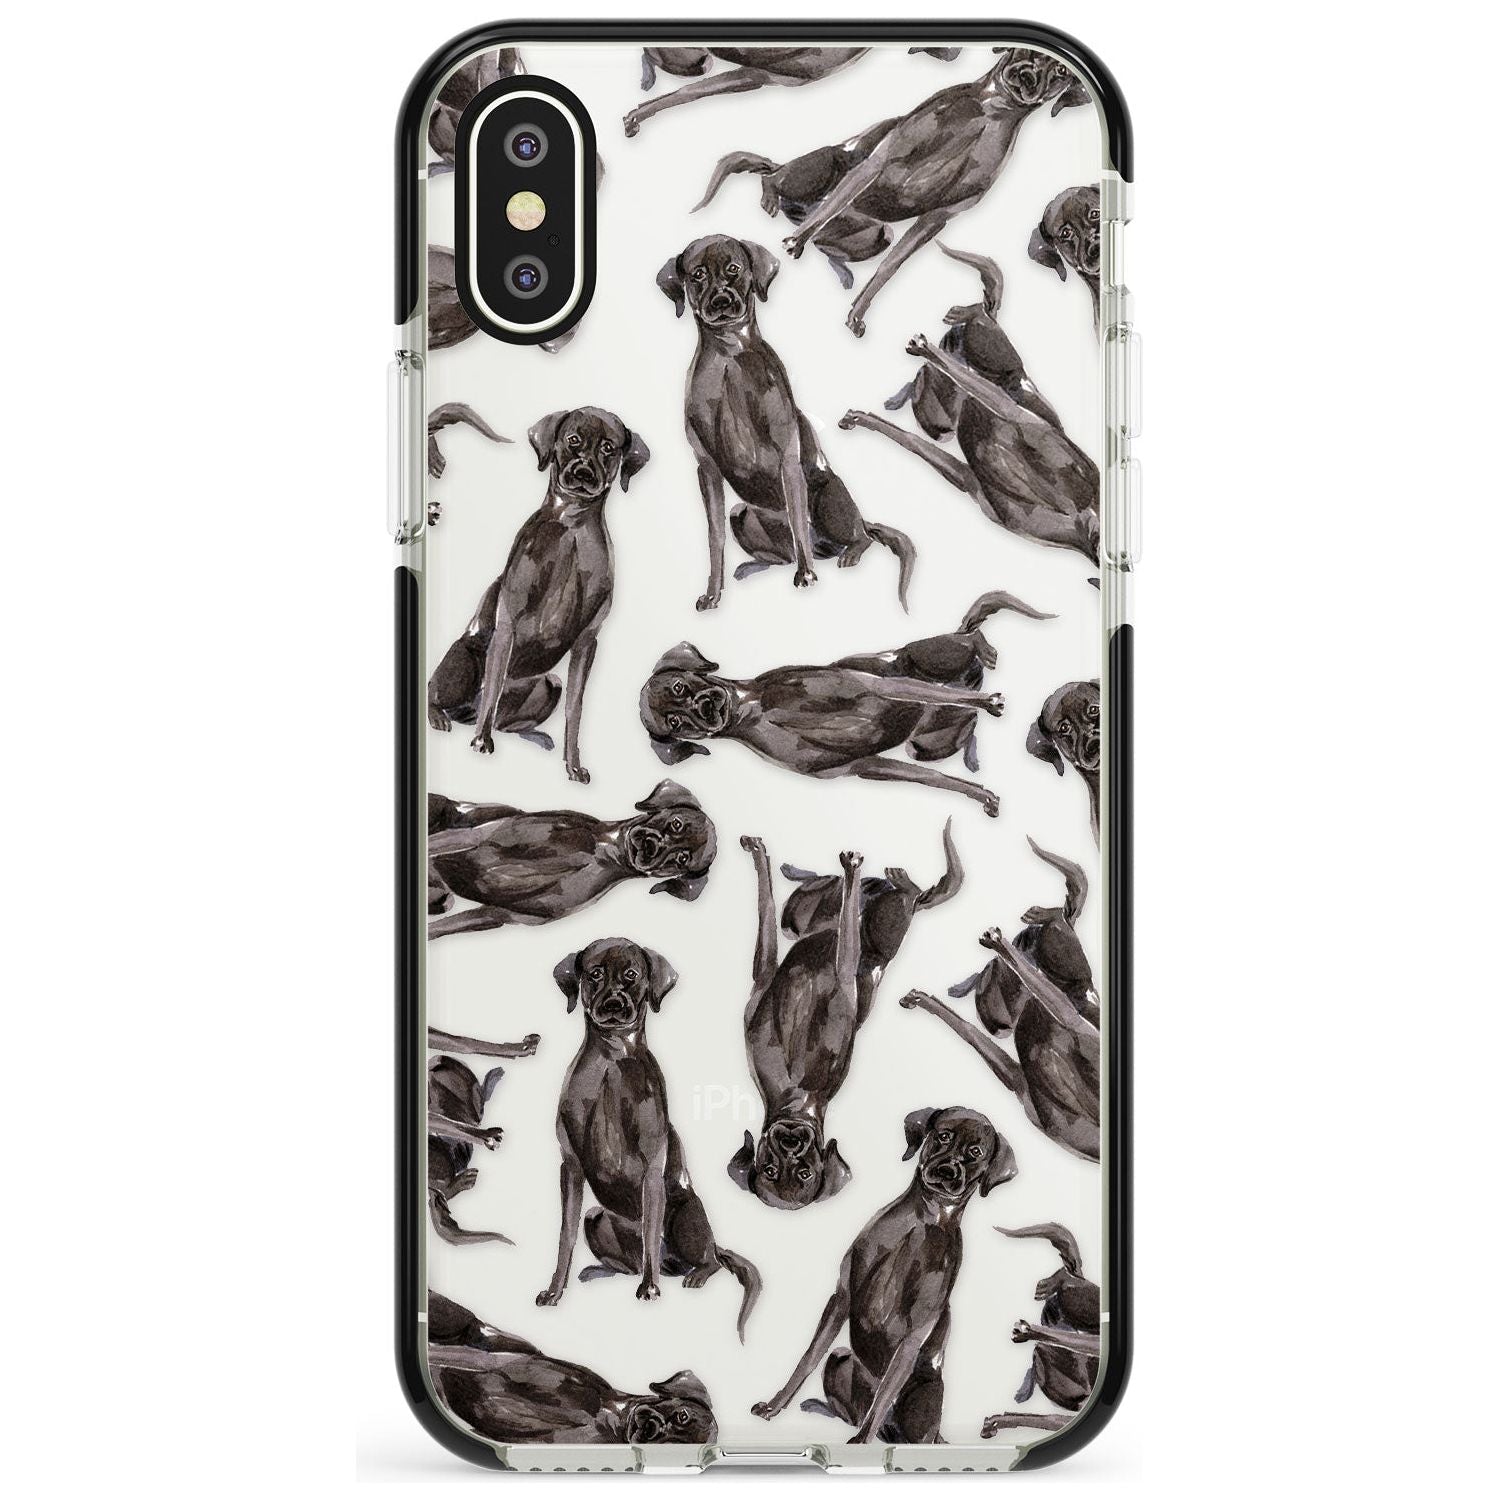 Black Labrador Watercolour Dog Pattern Black Impact Phone Case for iPhone X XS Max XR